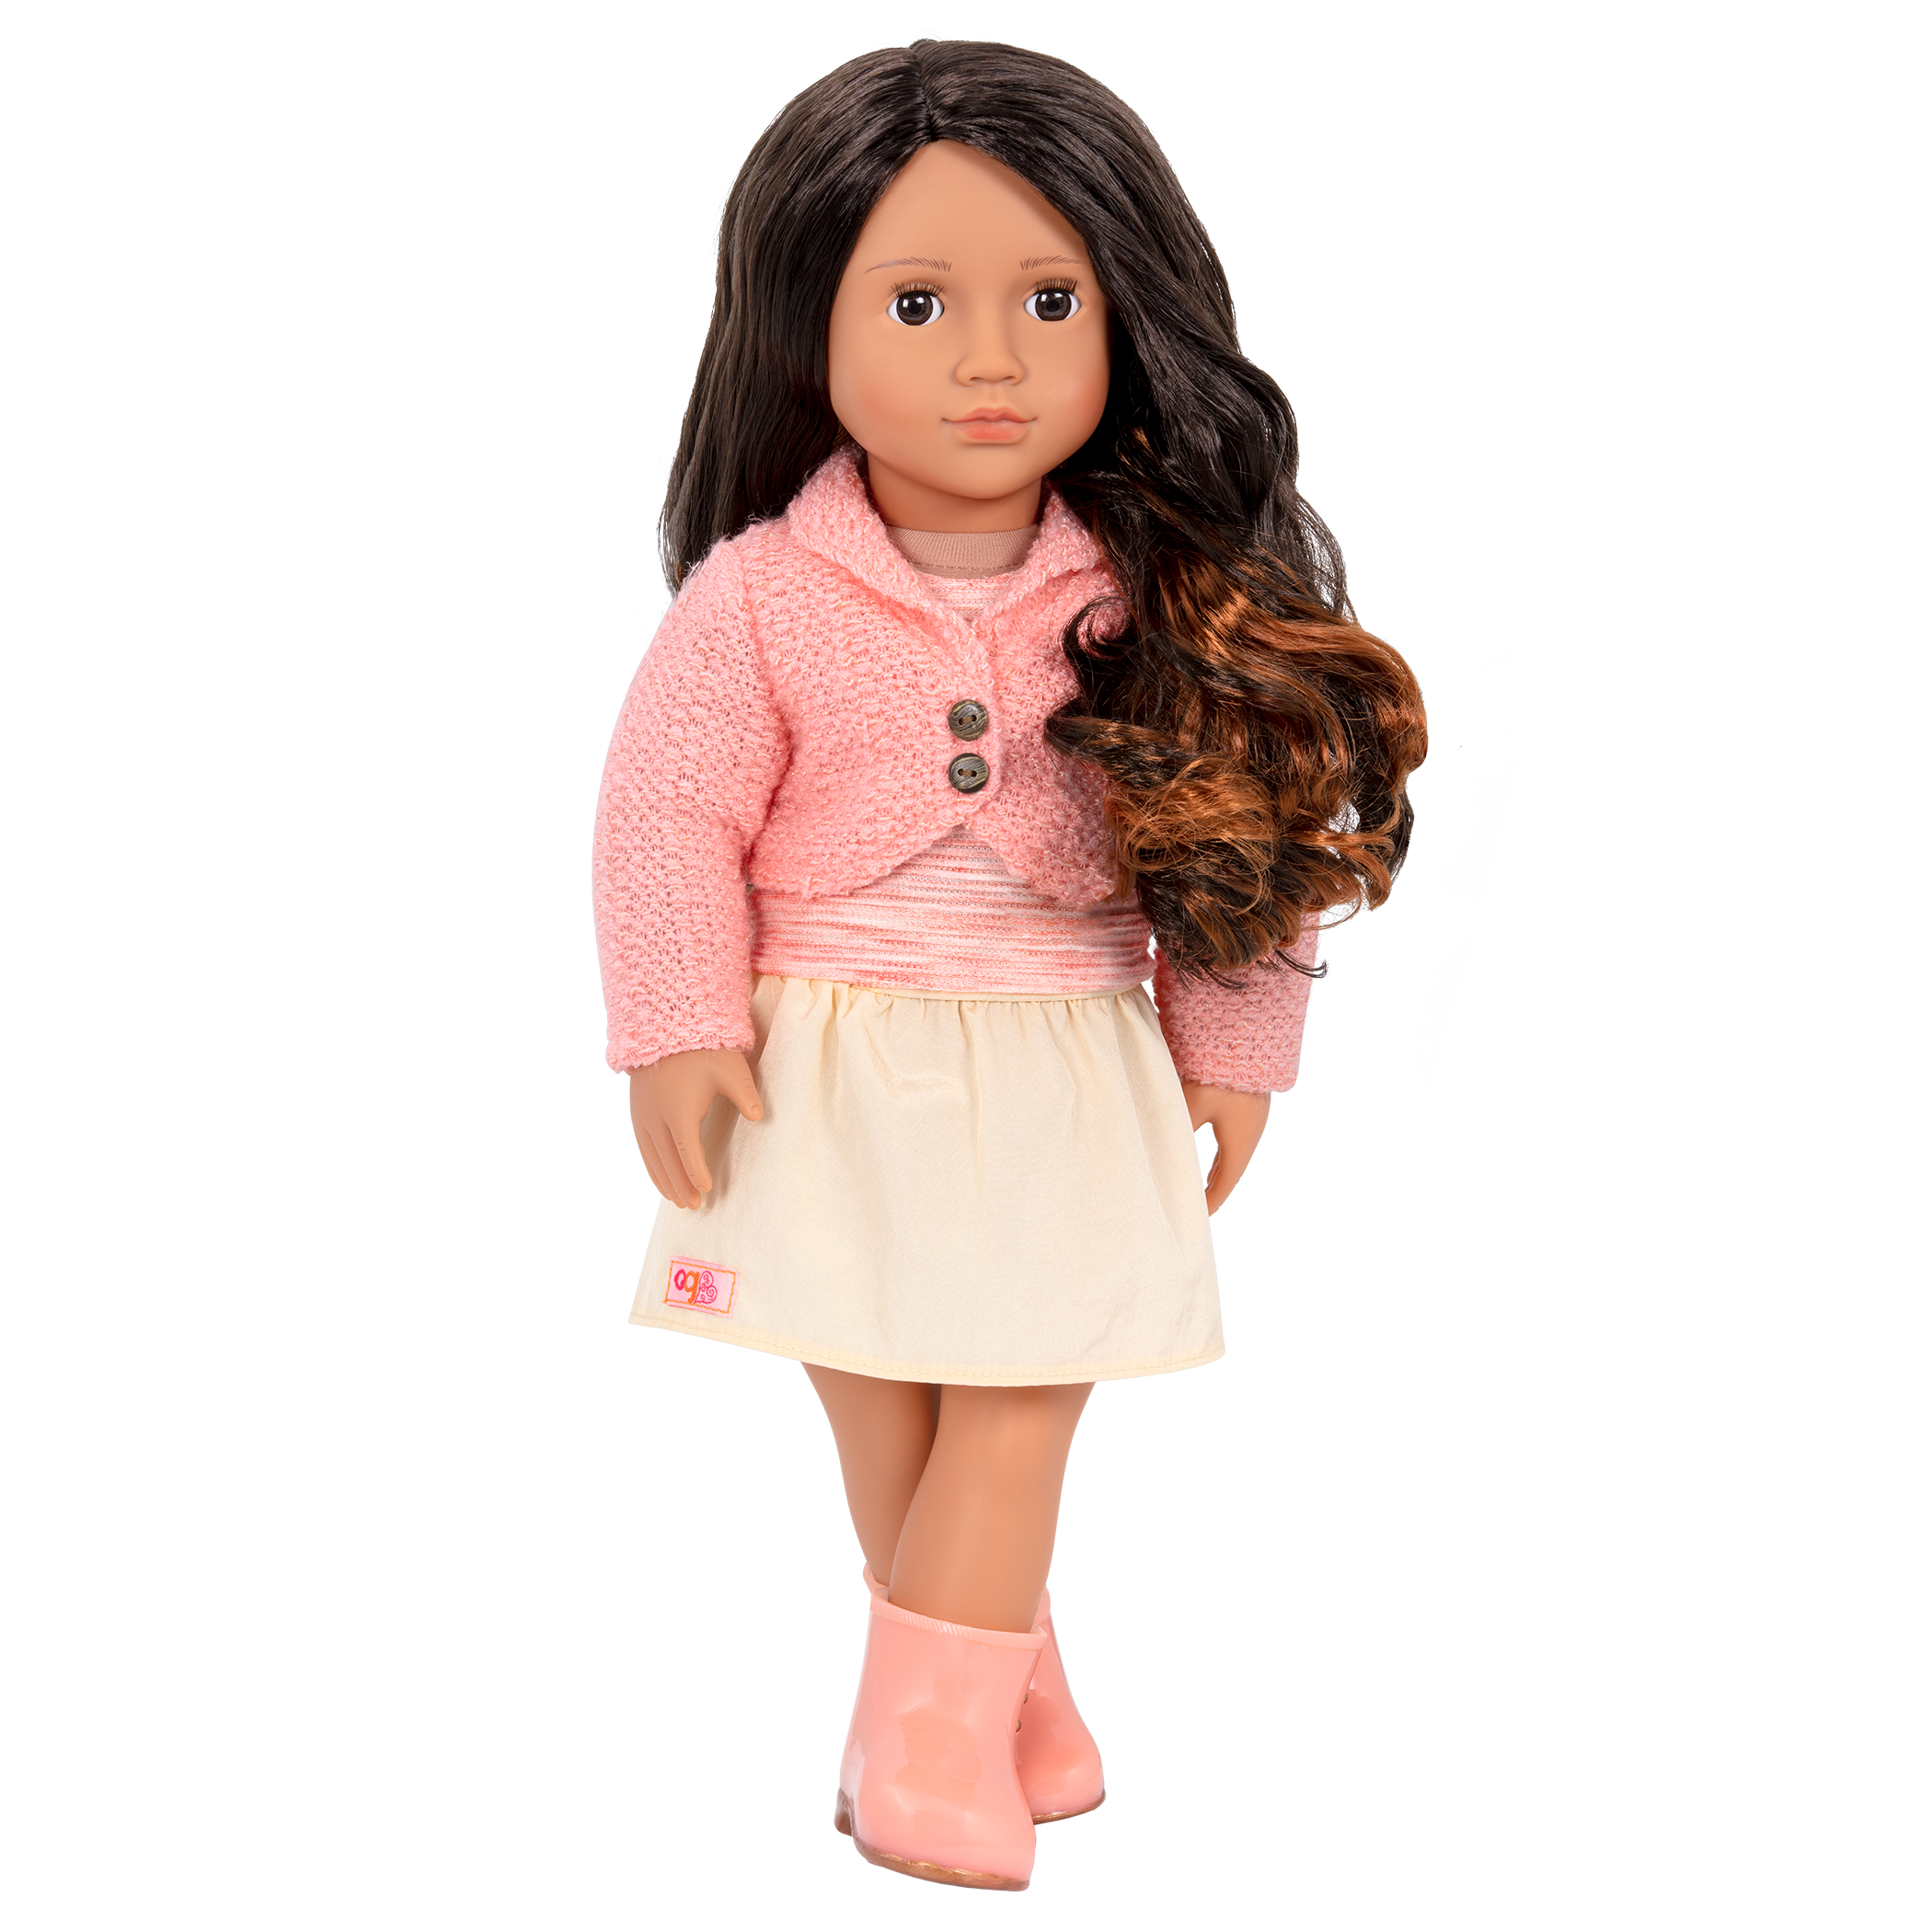 Maricela Regular 18-inch Doll with legs crossed